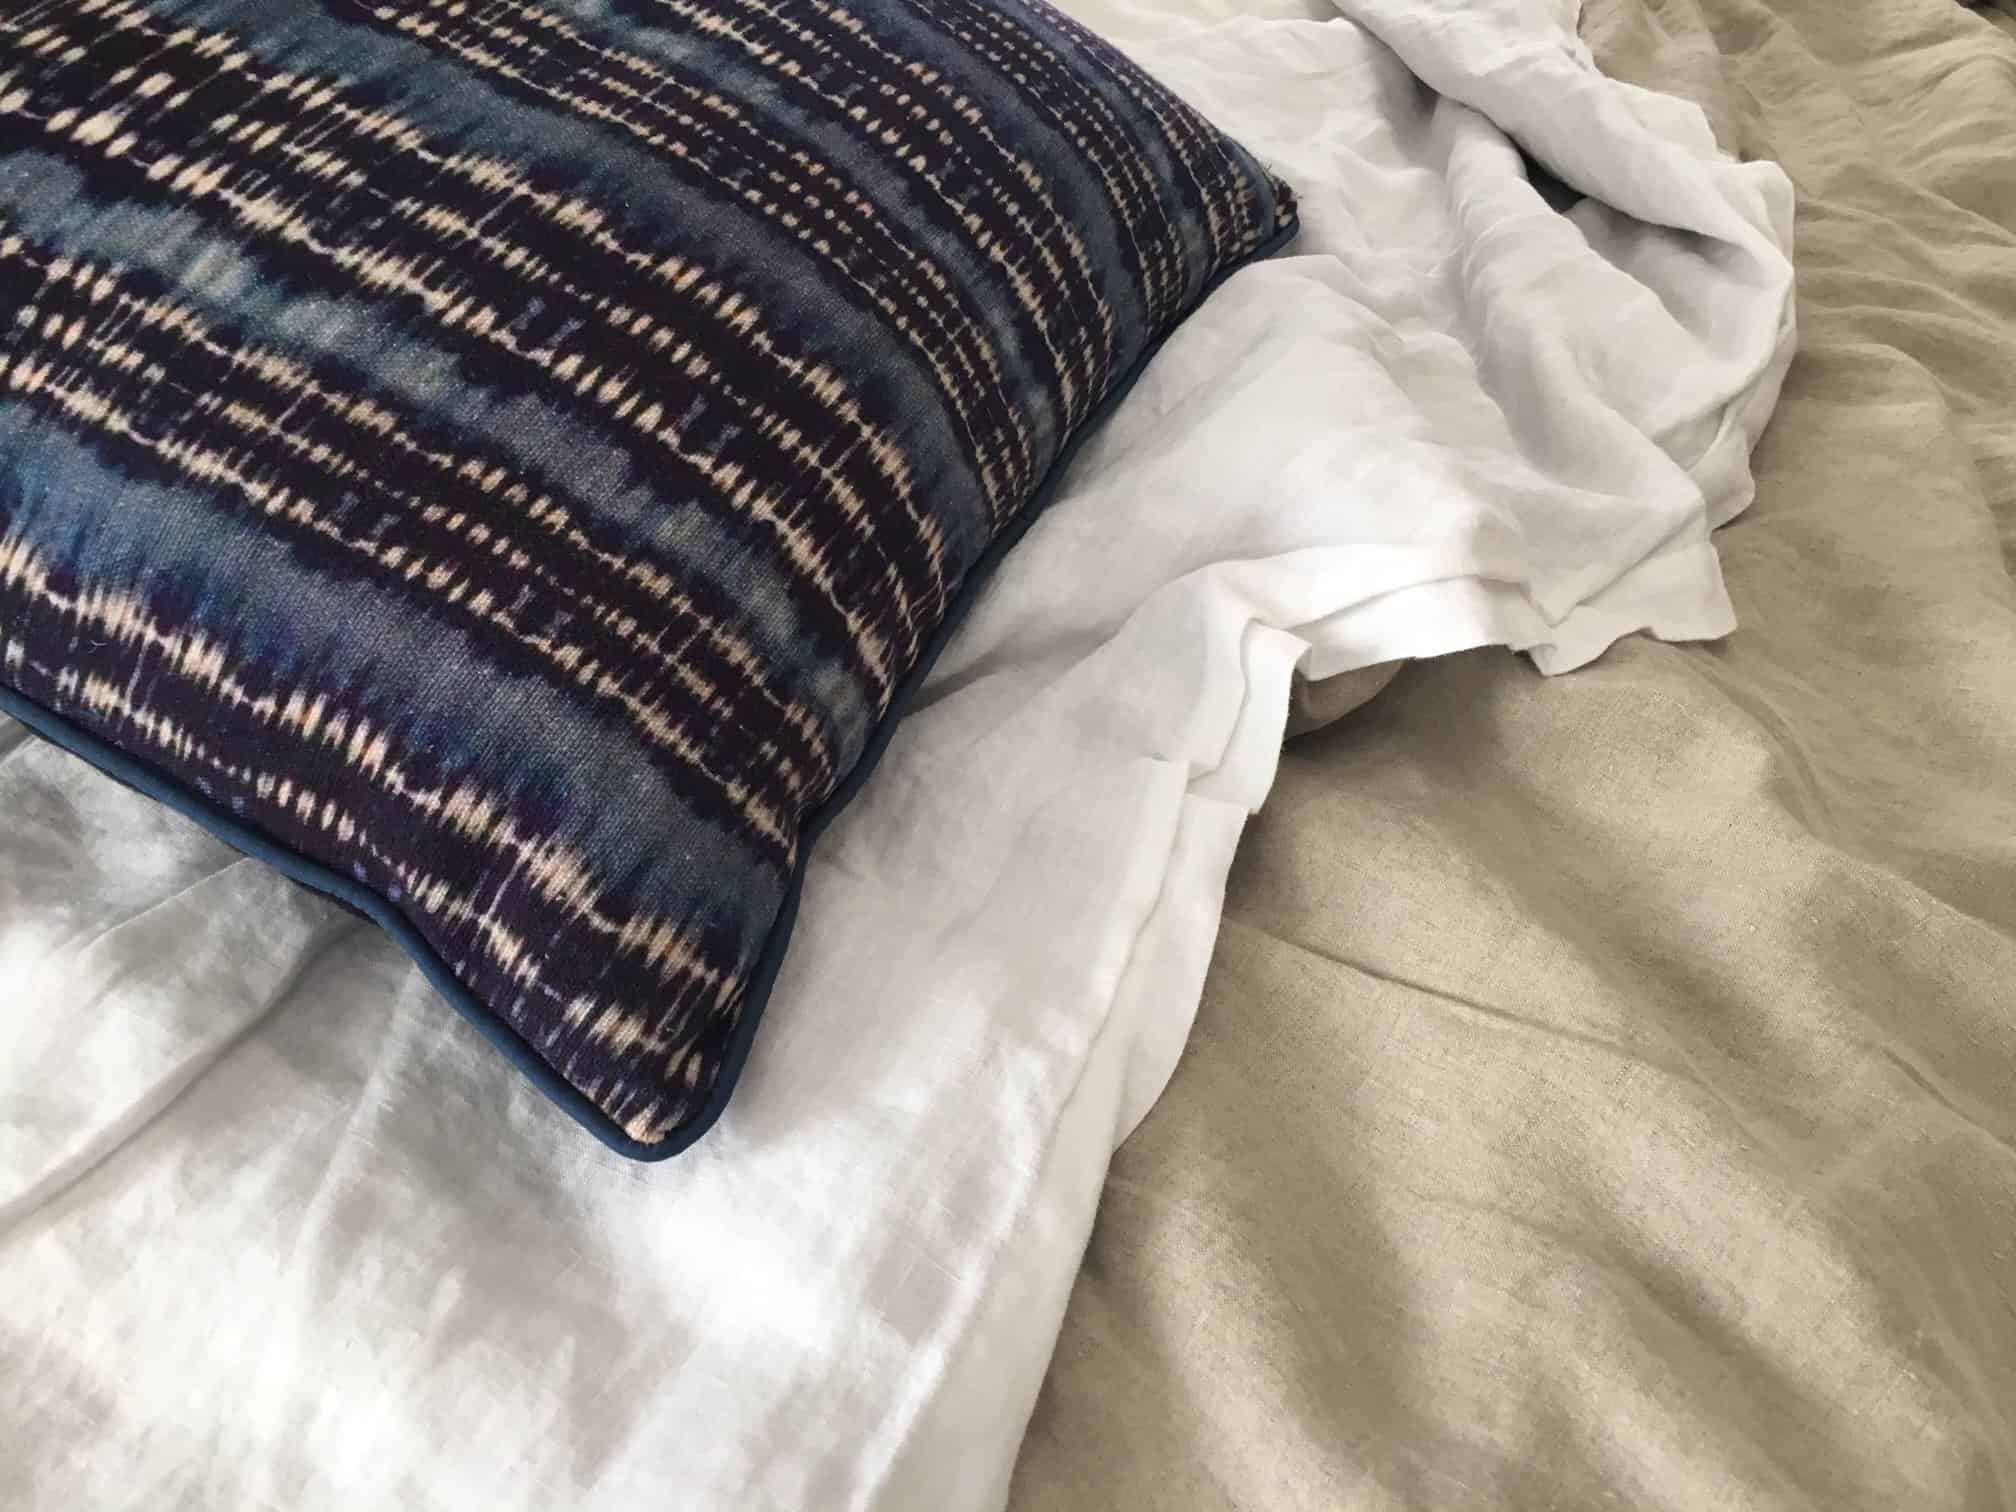 Close-up decorative pillow and linen bedding.